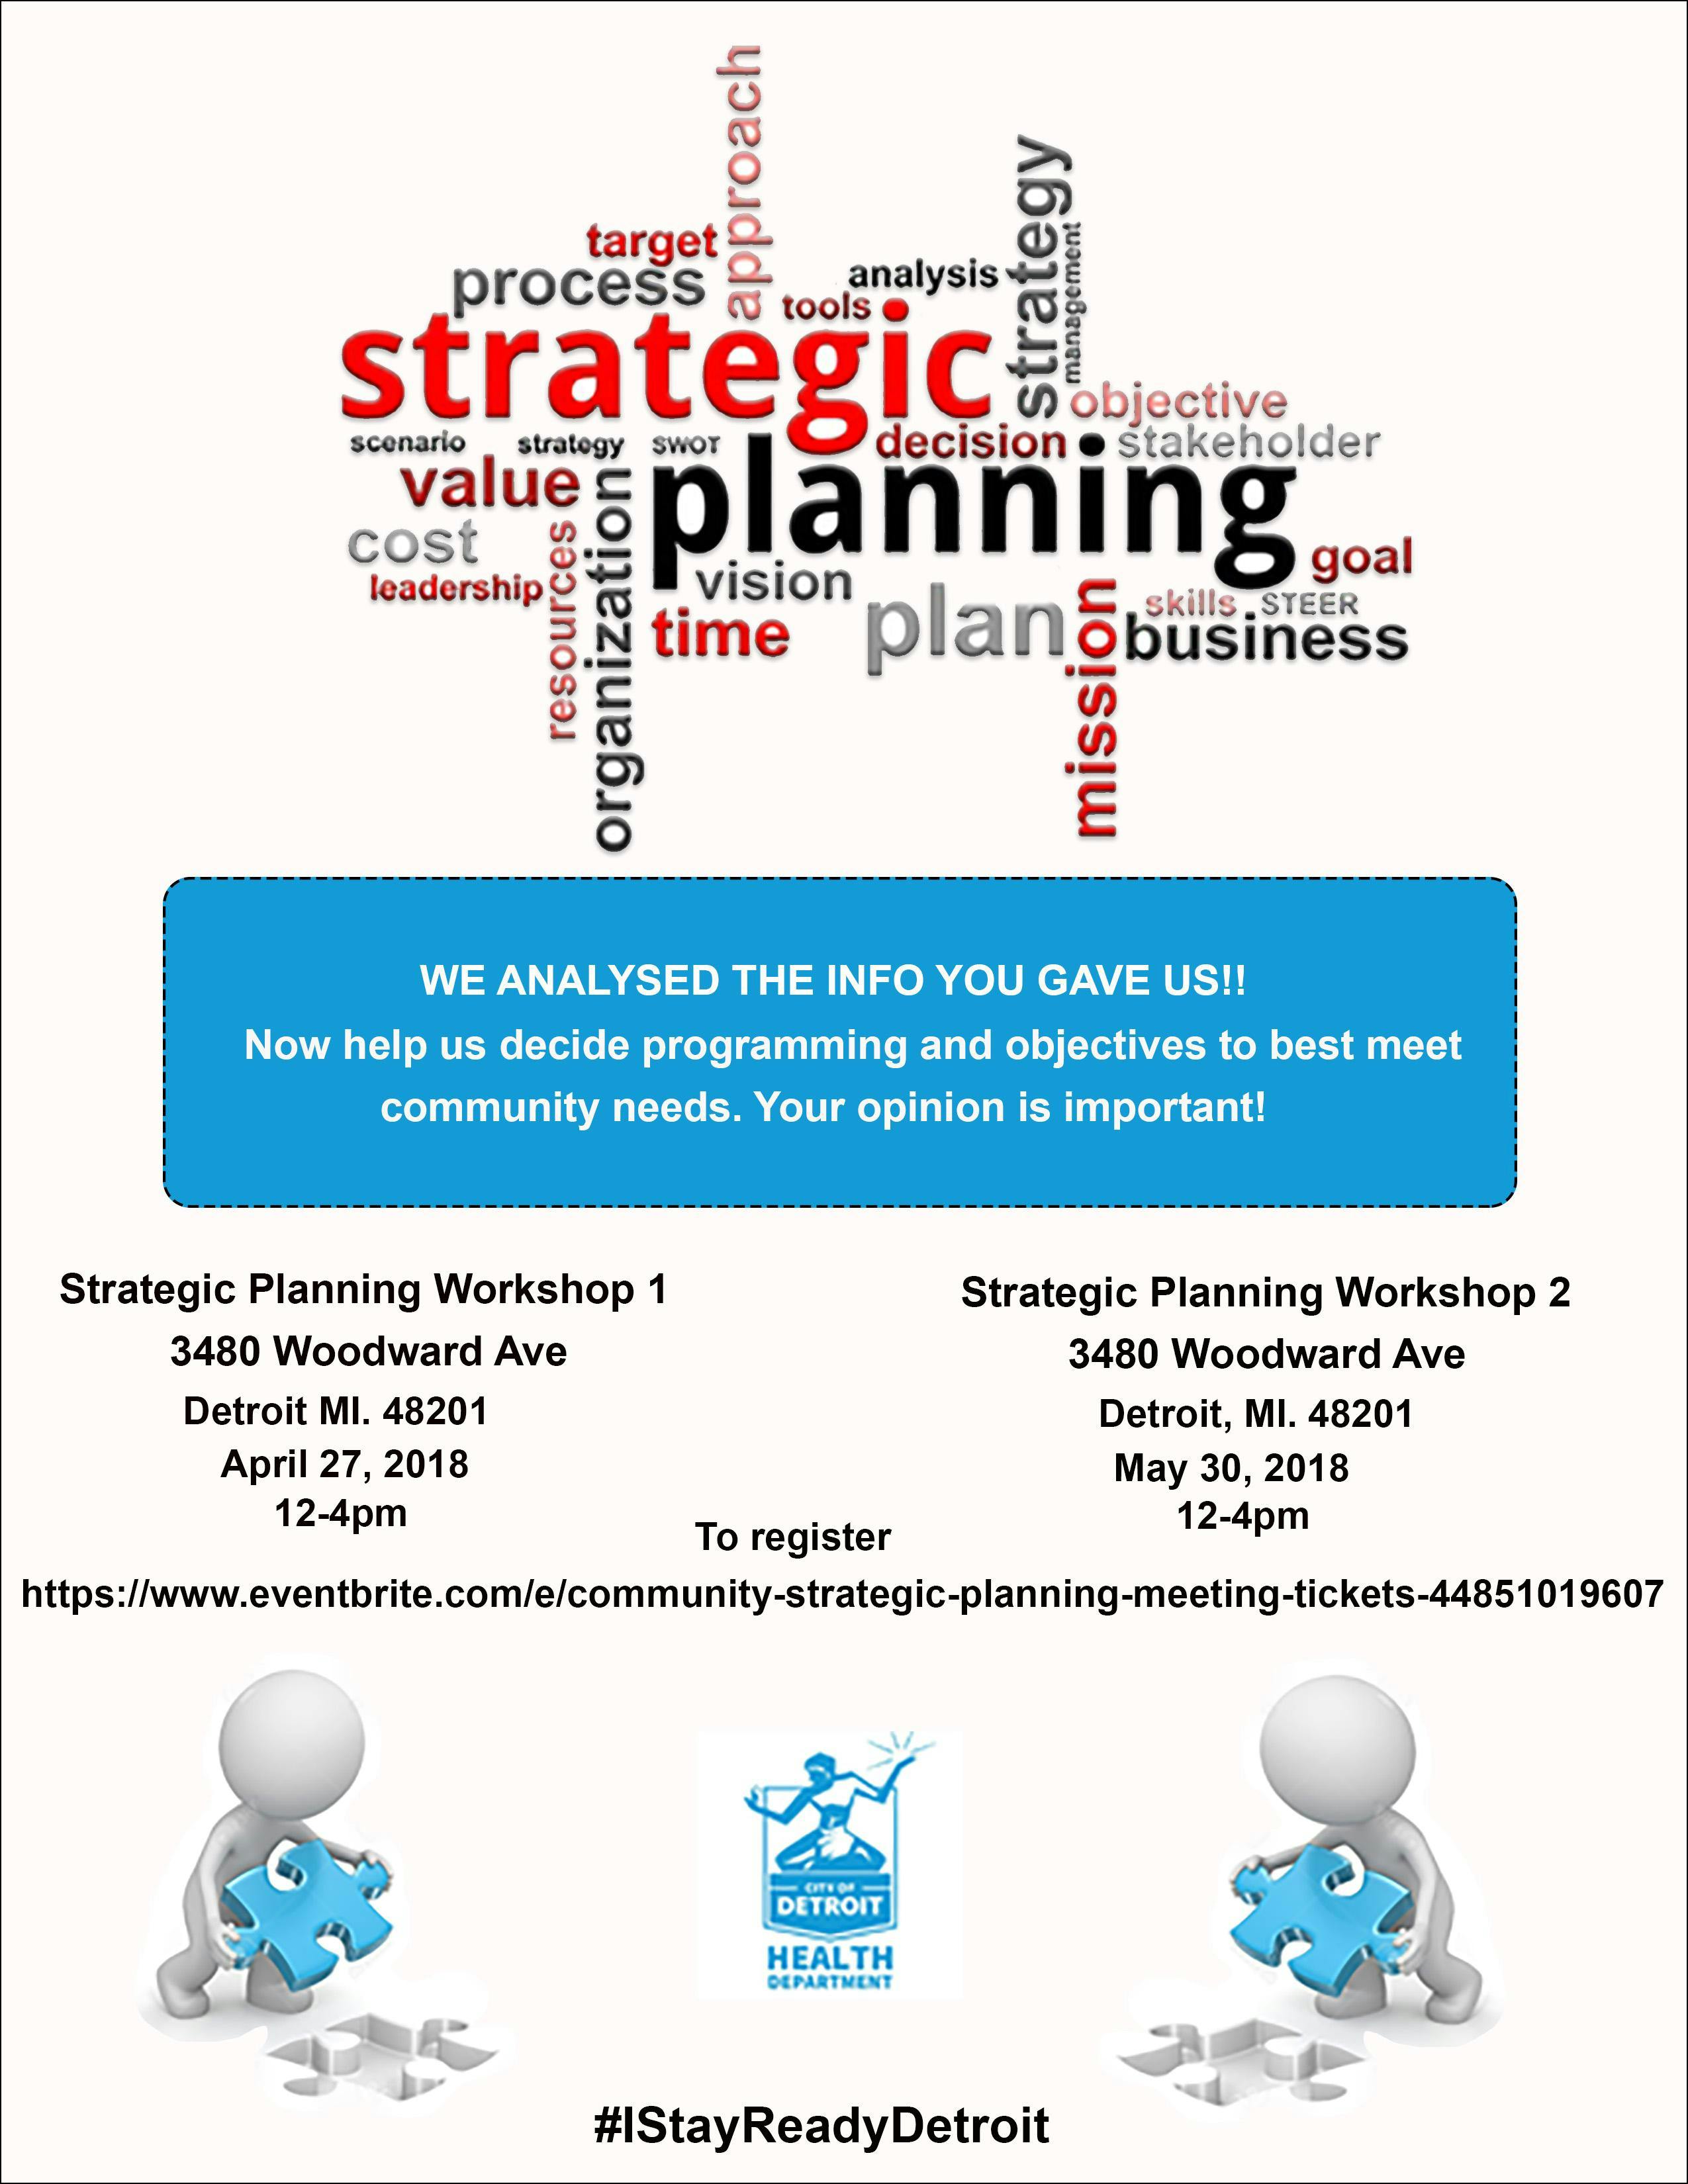 Community Strategic Planning Meeting (Part 2)